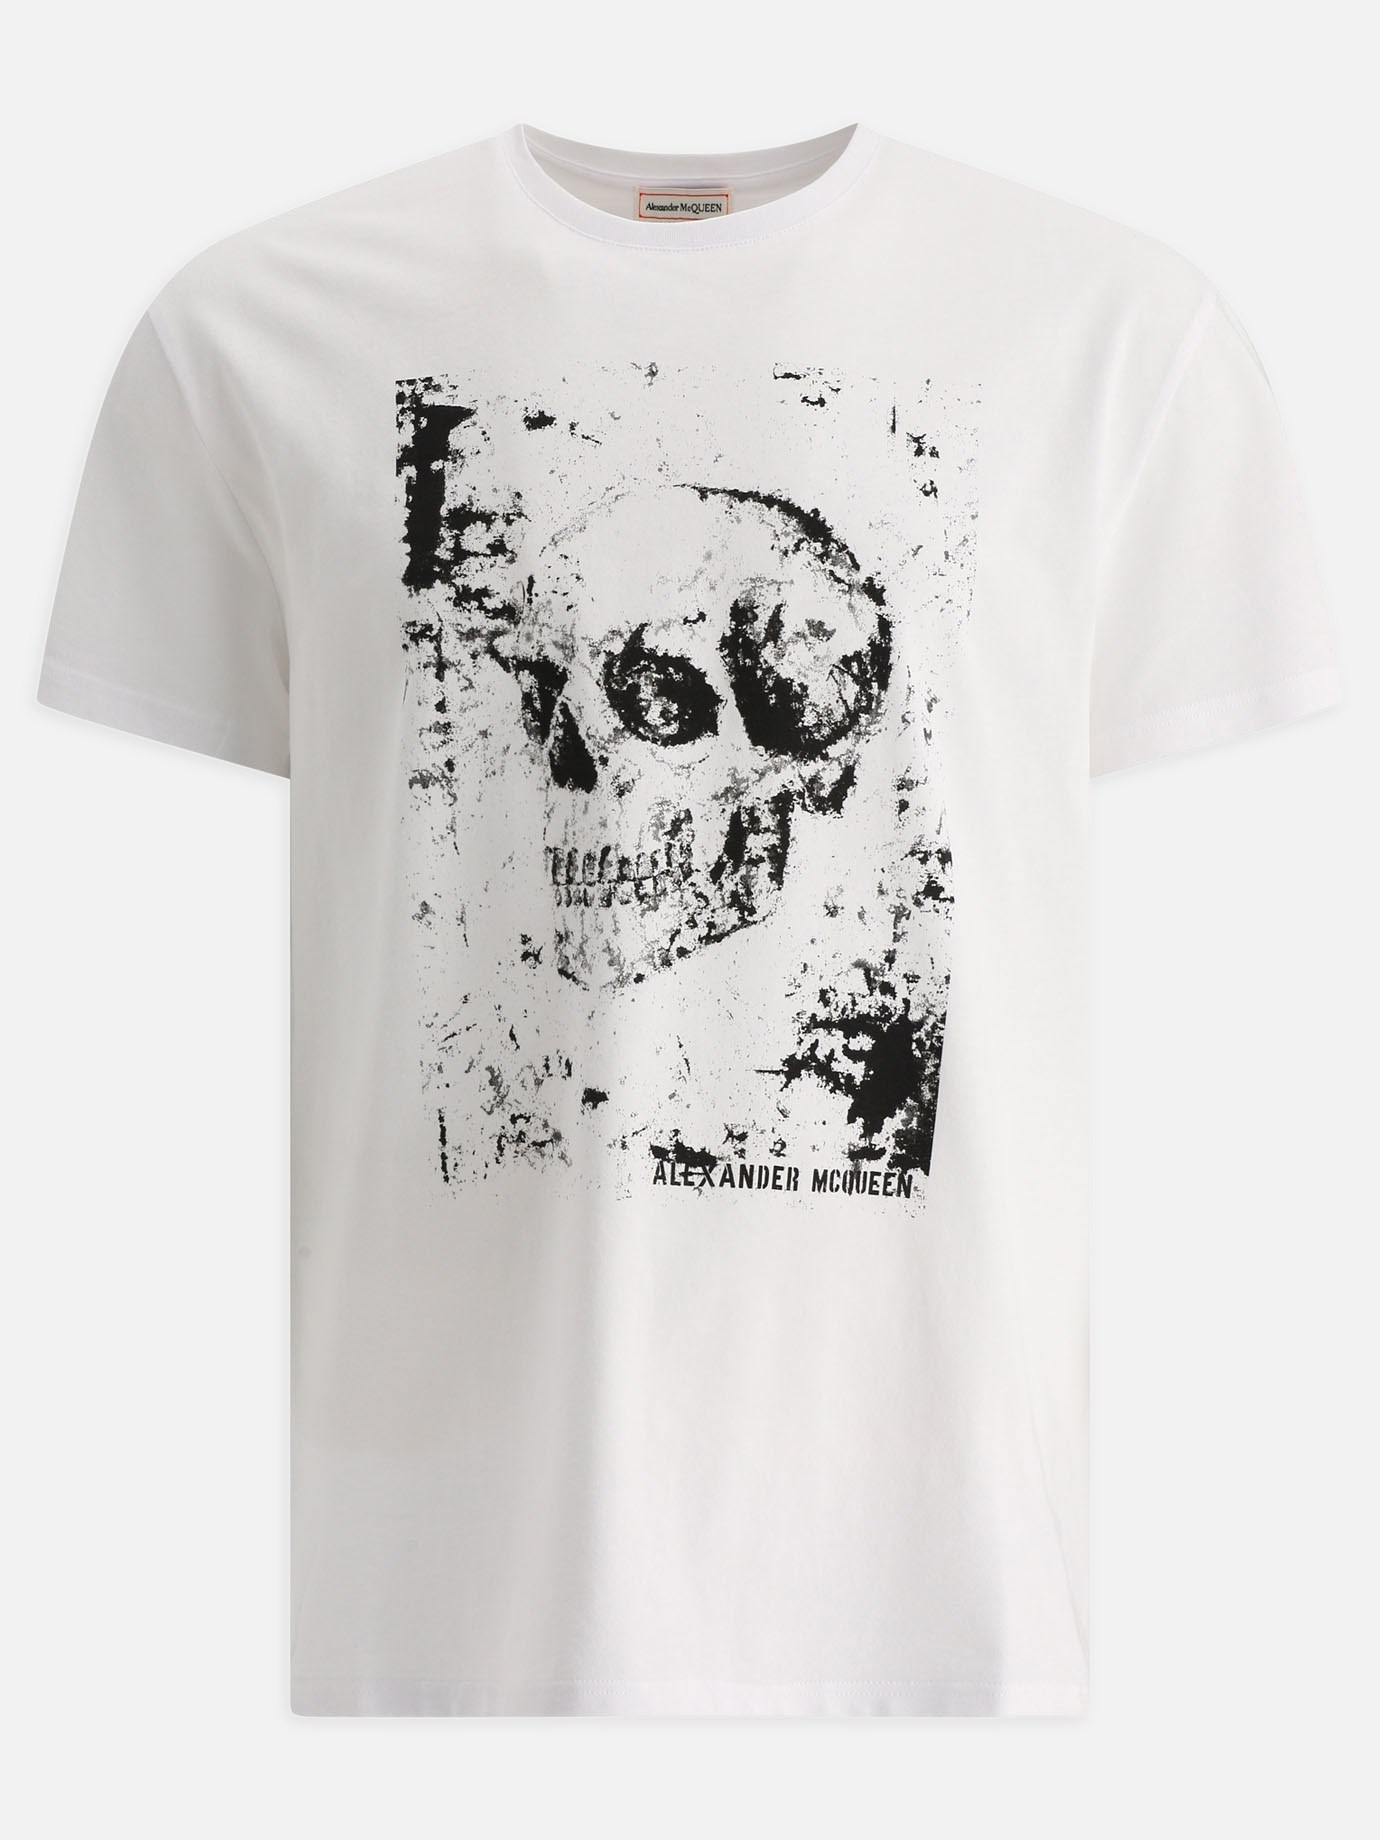  Skull  t-shirtby Alexander McQueen - 1